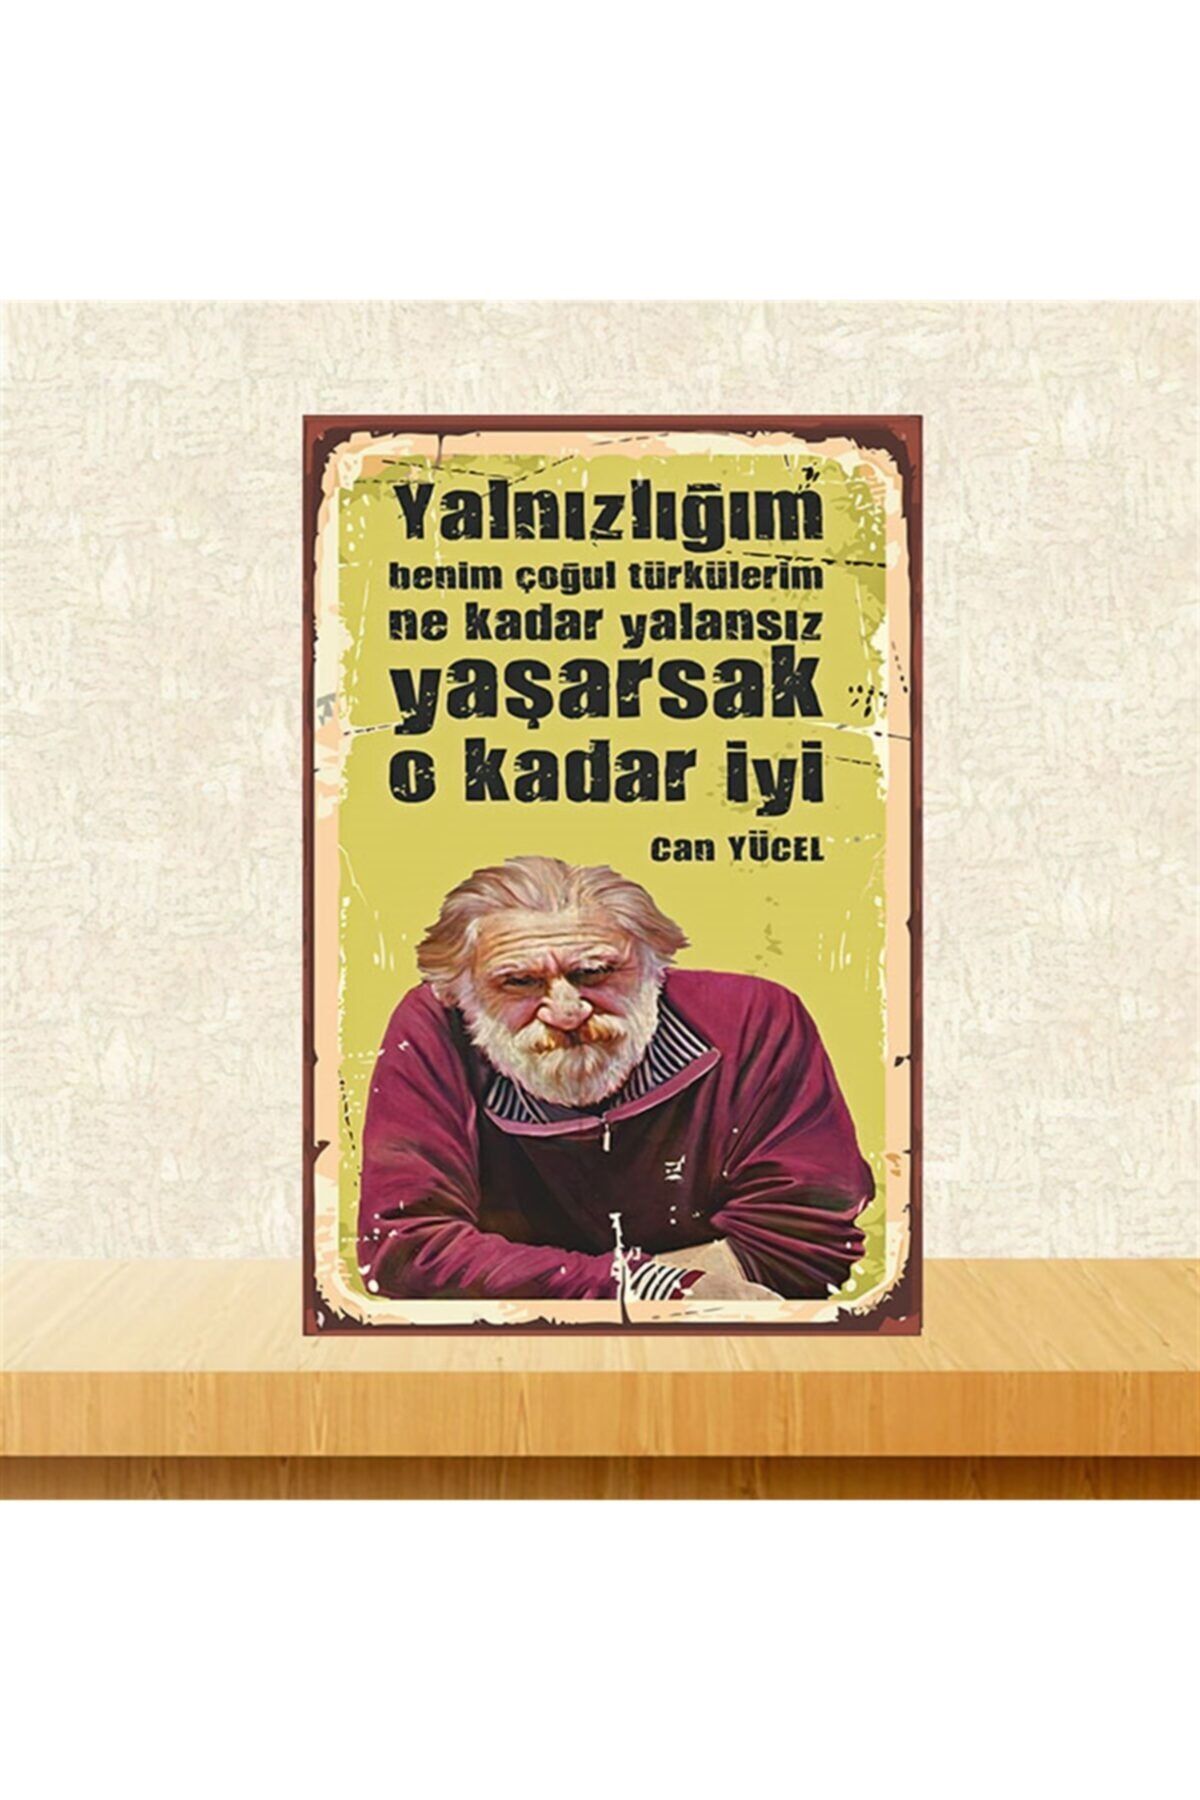 TAKIFİX Yalansız Yaşarsak Can Yücel 20-30 cm Retro Ahşap Poster